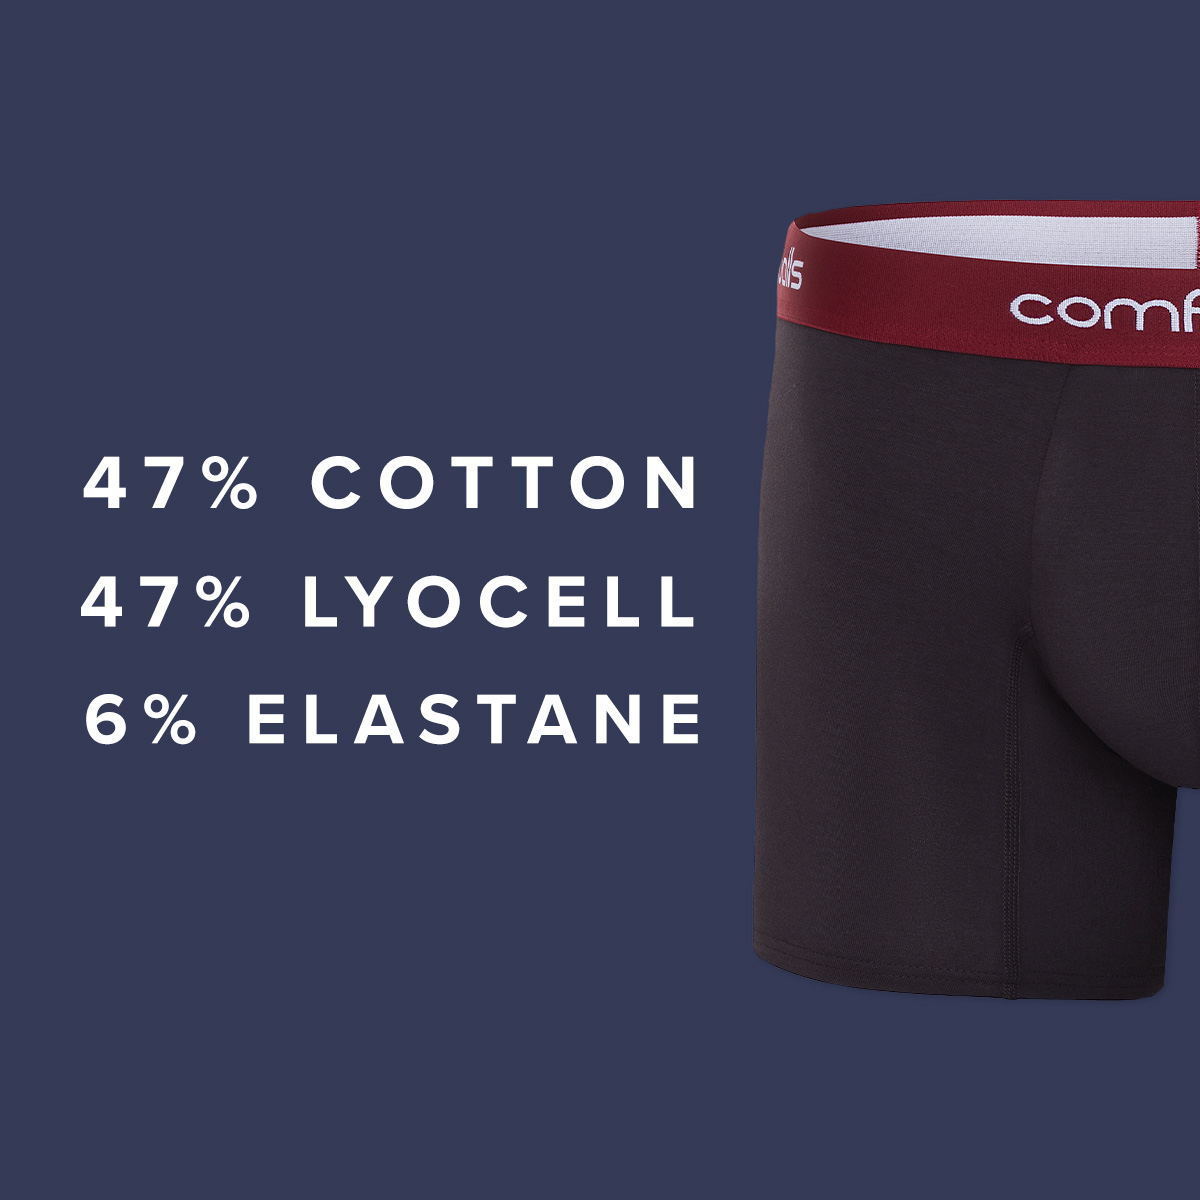 COMFYCEL - The World's Softest Underwear 